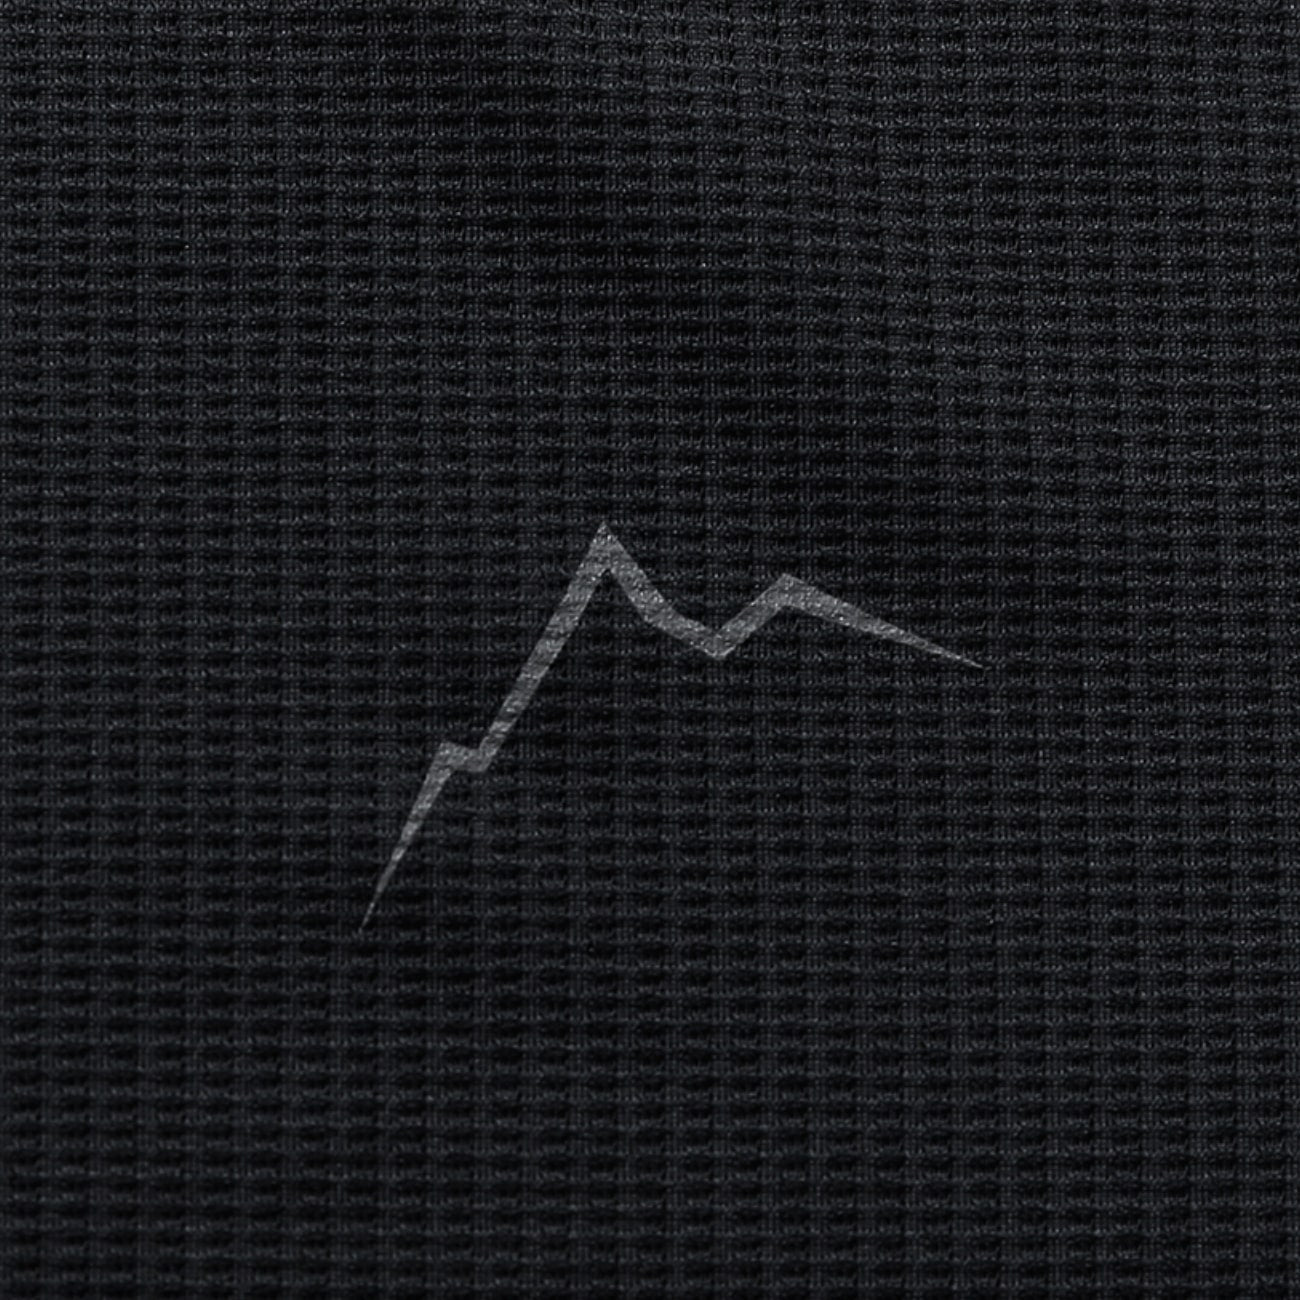 Cayl - Logo Air Short Sleeve (Black)